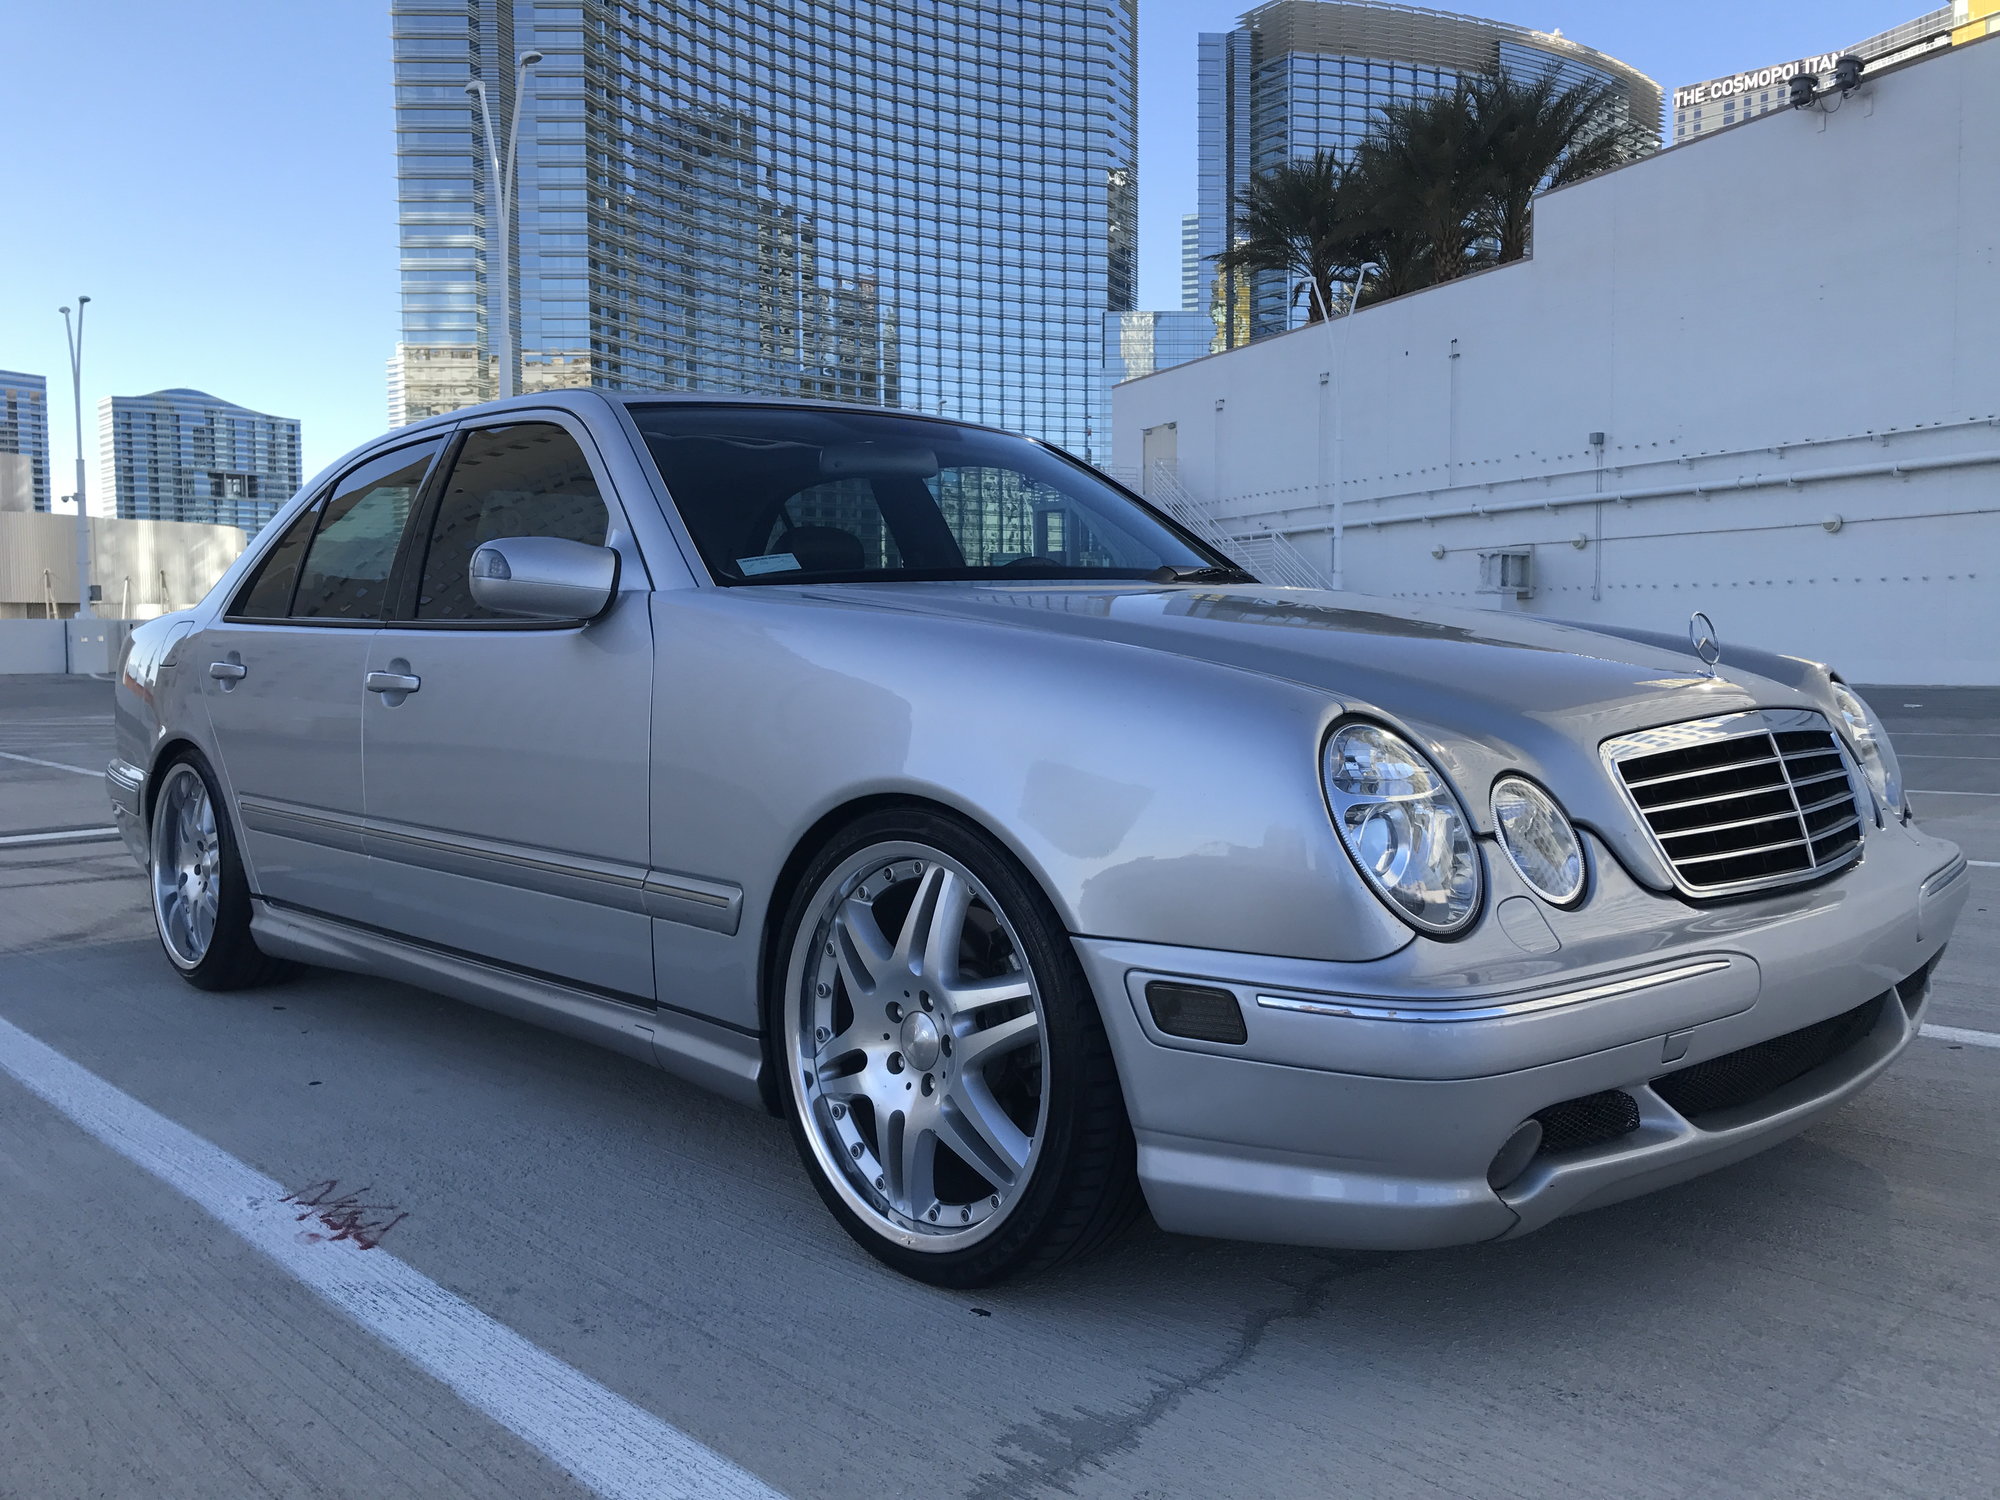 2000 Mercedes-Benz E55 AMG - FS: 2000 E55 AMG *MINT CONDITION* *tasteful mods* *BRABUS* - Used - VIN WDBJF74G5YA957585 - 176,000 Miles - 8 cyl - 2WD - Automatic - Sedan - Silver - Las Vegas, NV 89139, United States